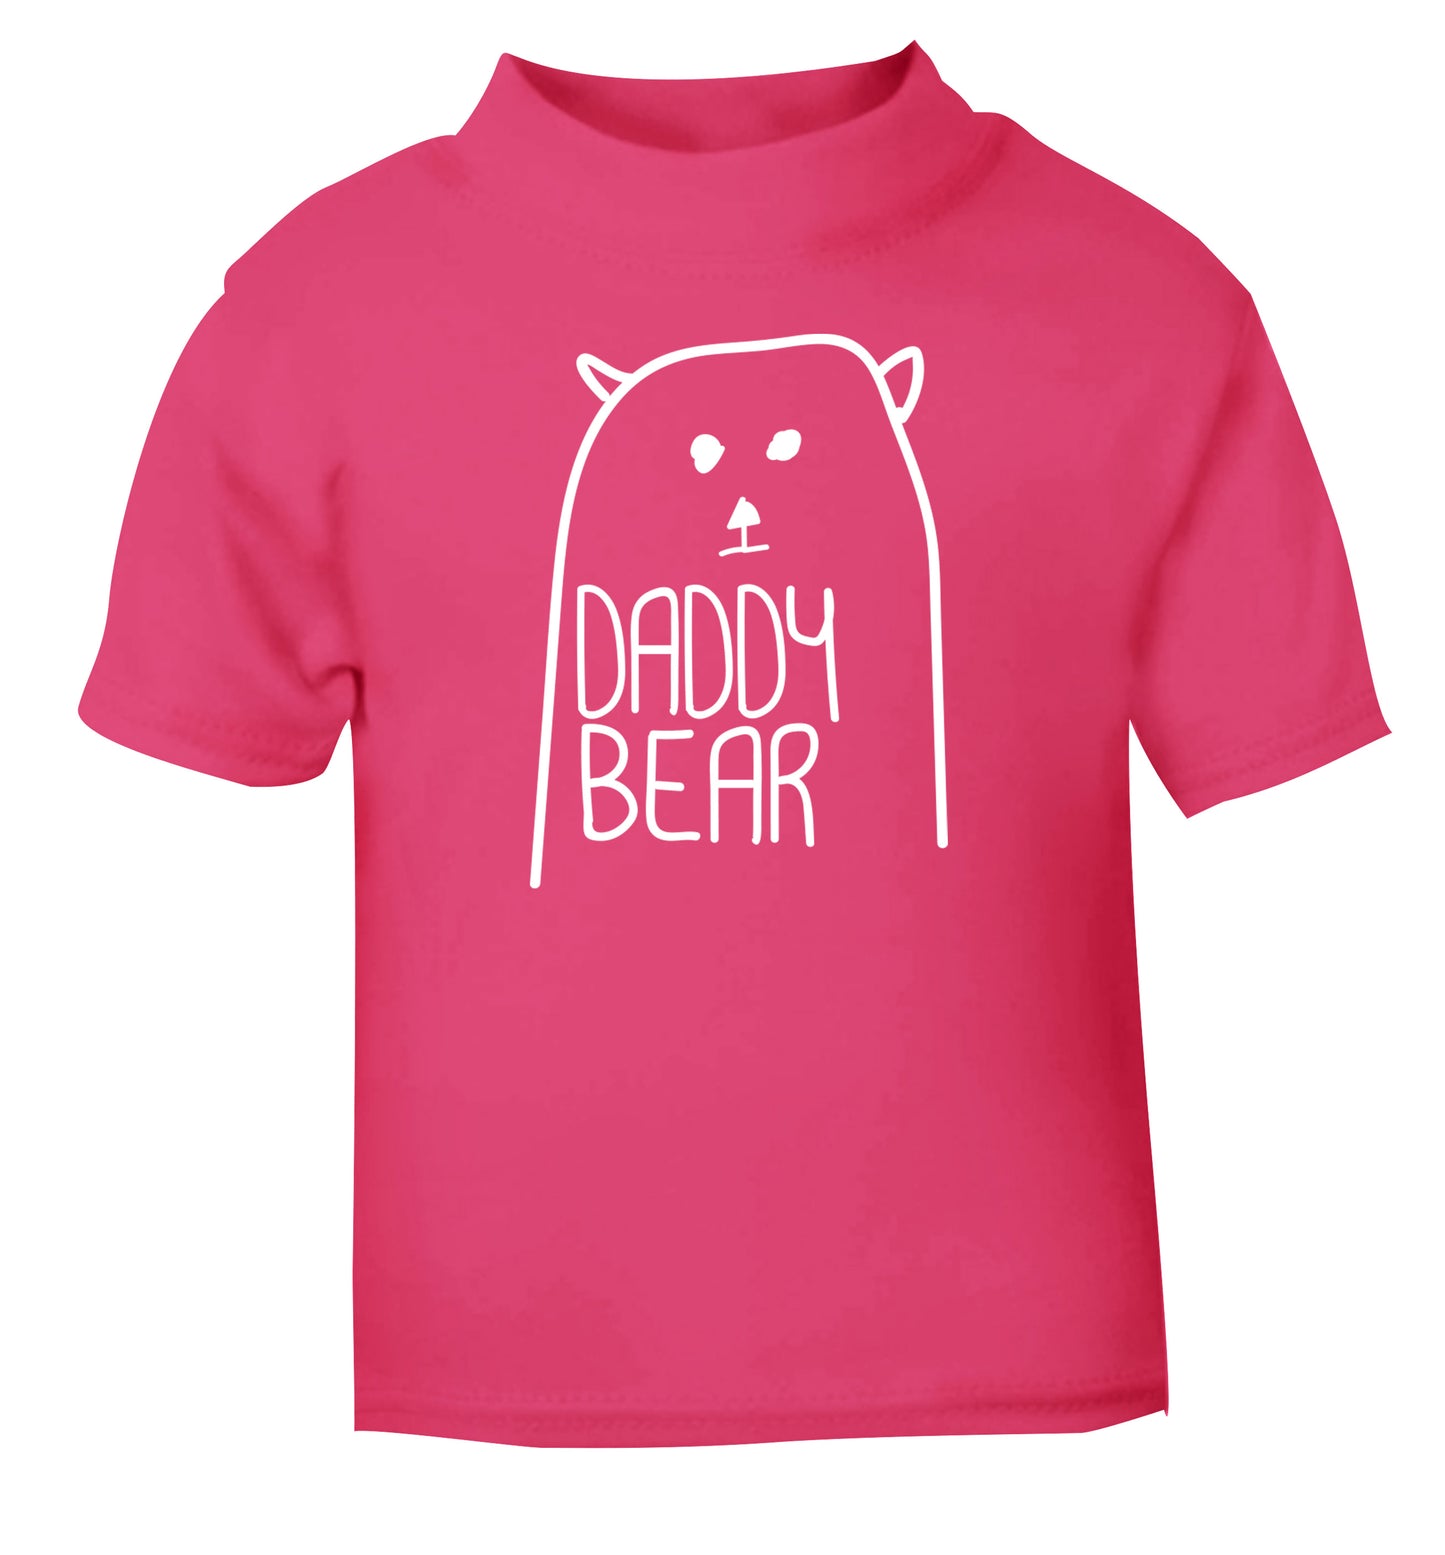 Daddy bear pink Baby Toddler Tshirt 2 Years